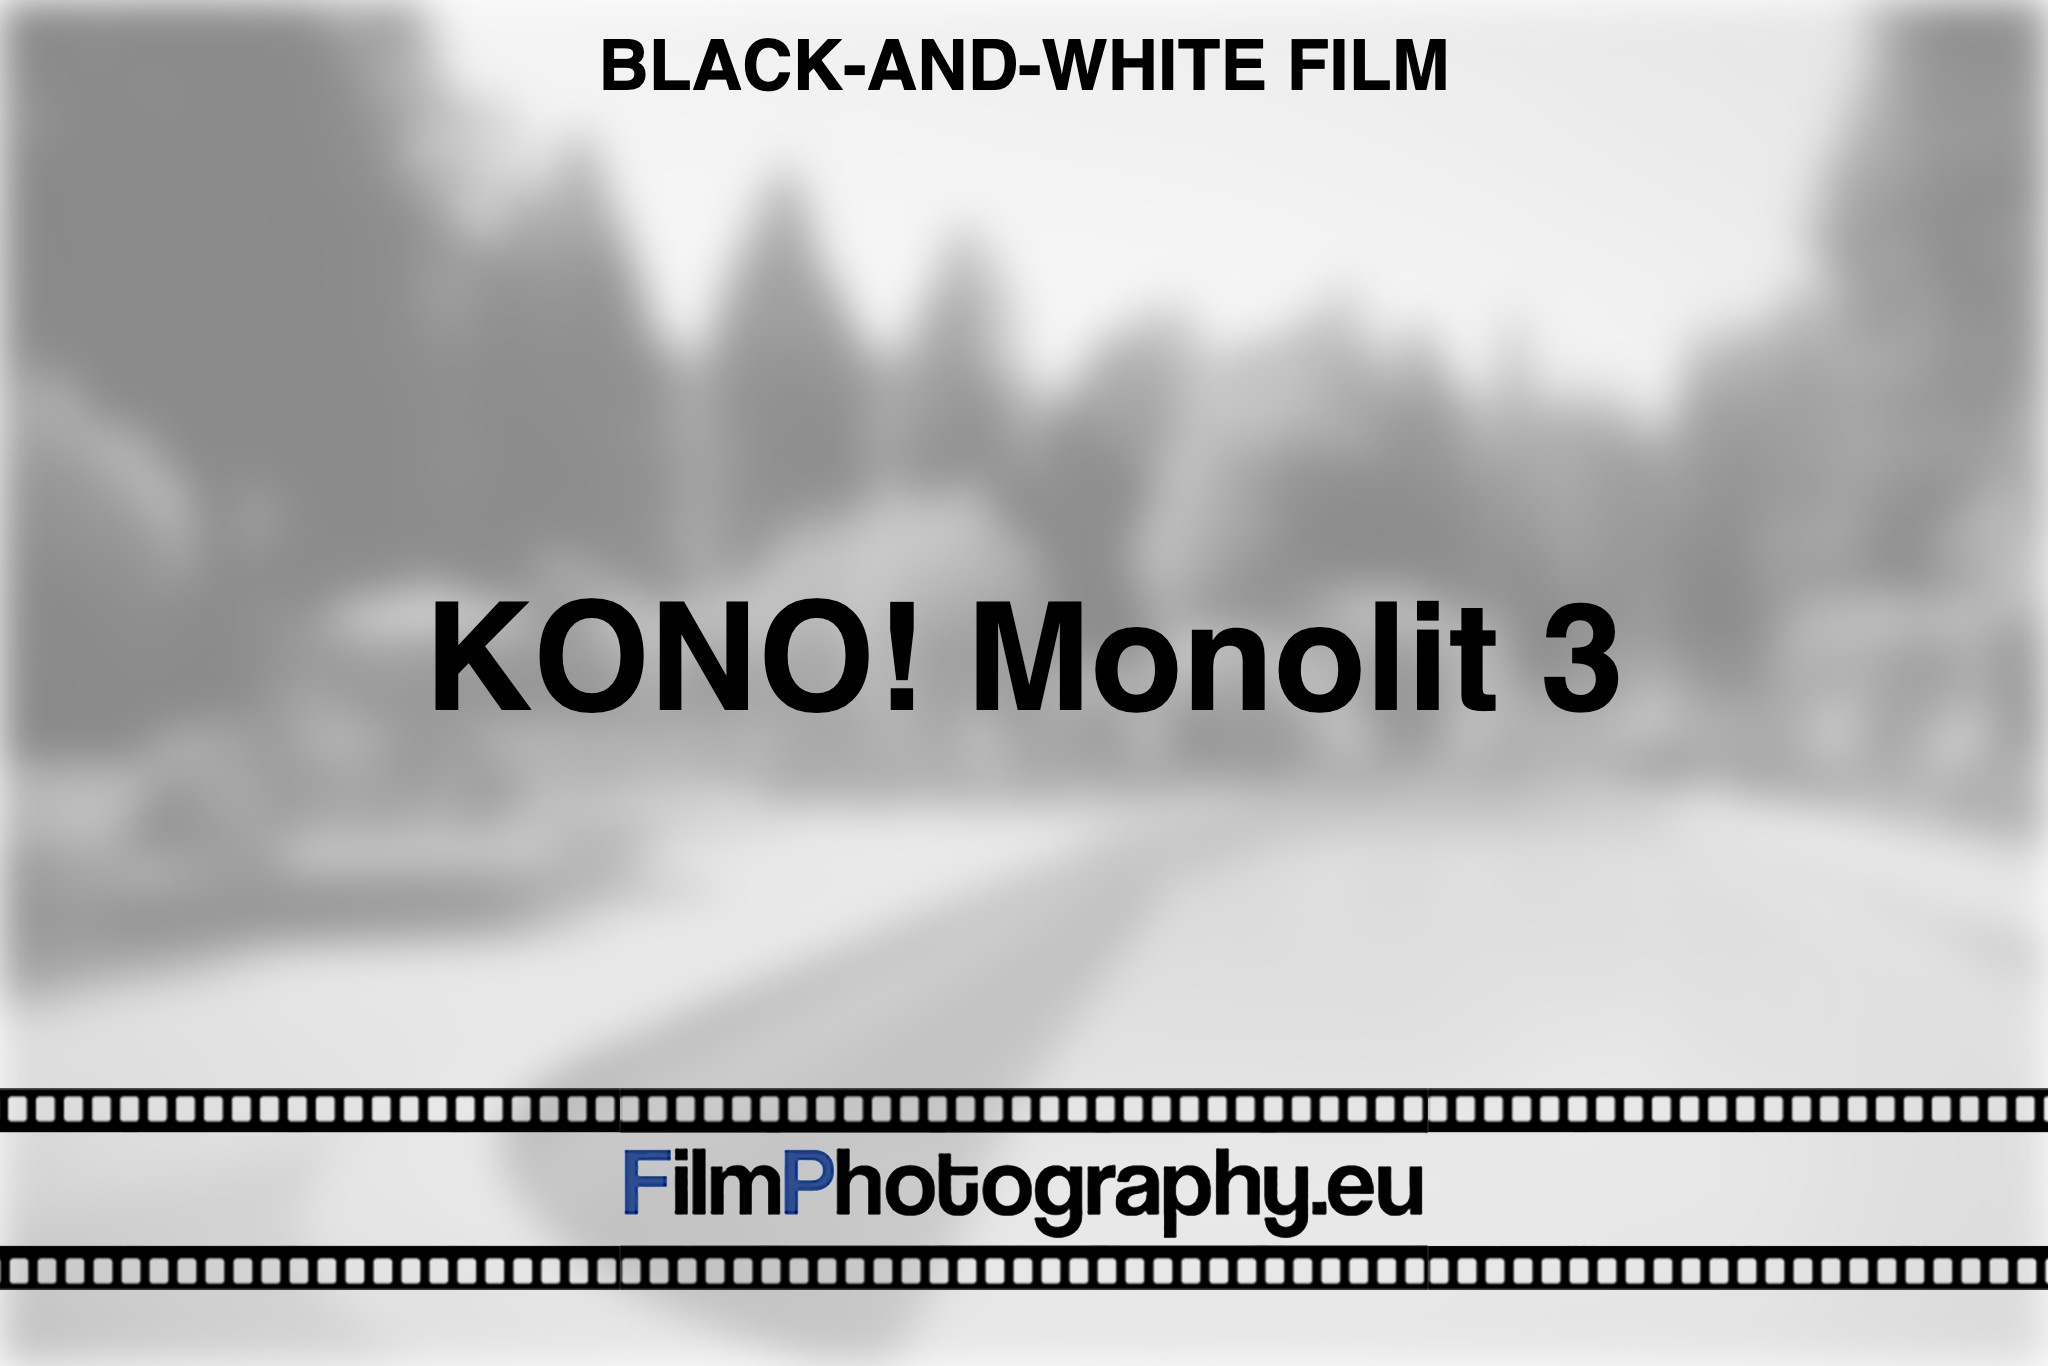 kono-monolit-3-black-and-white-film-bnv